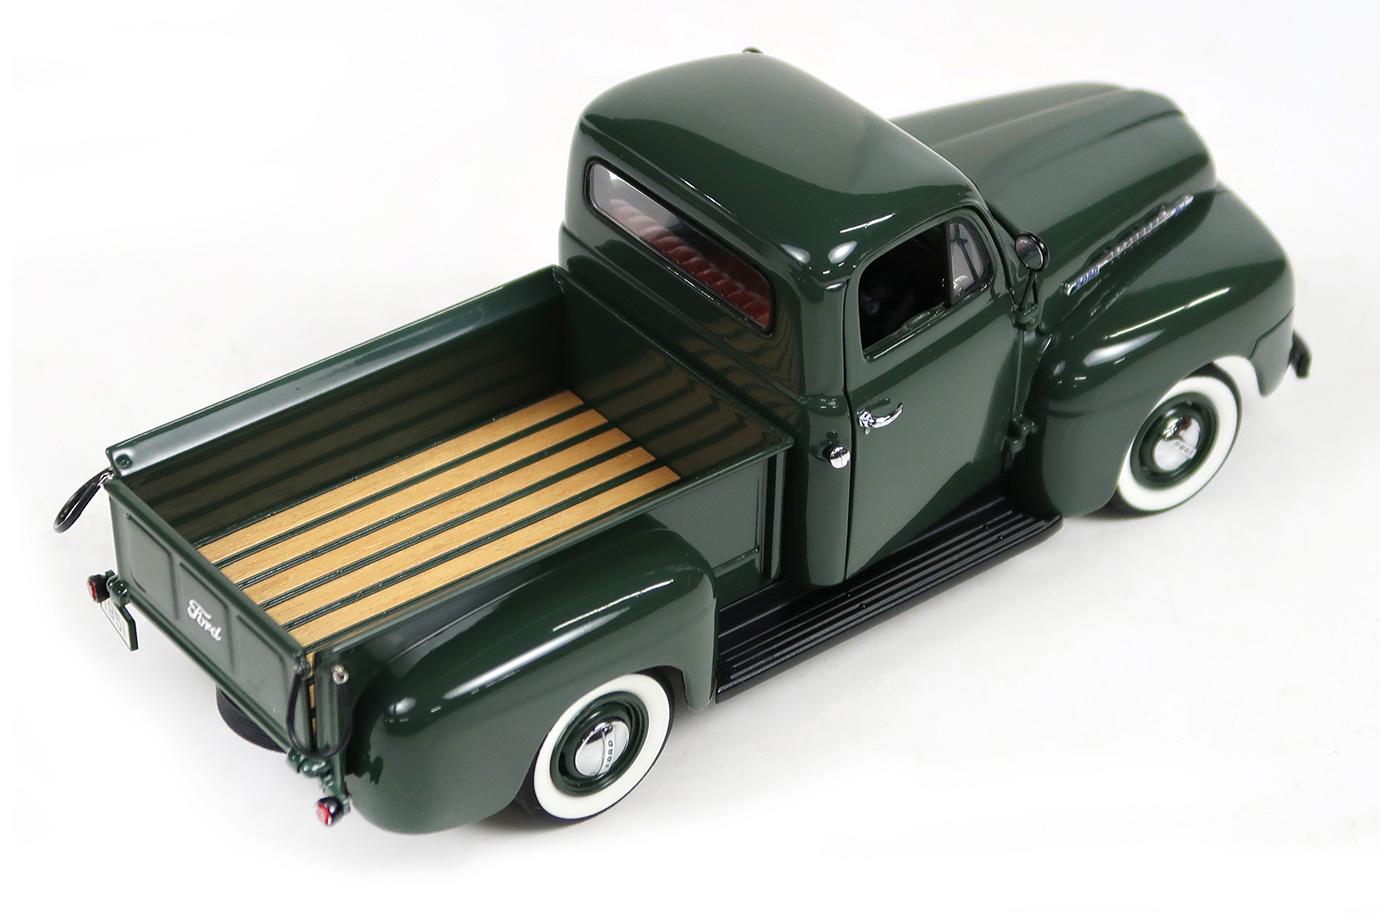 Toy Scale Model, Replica 1951 Ford F-1 Pickup, New In Box, 11" L.